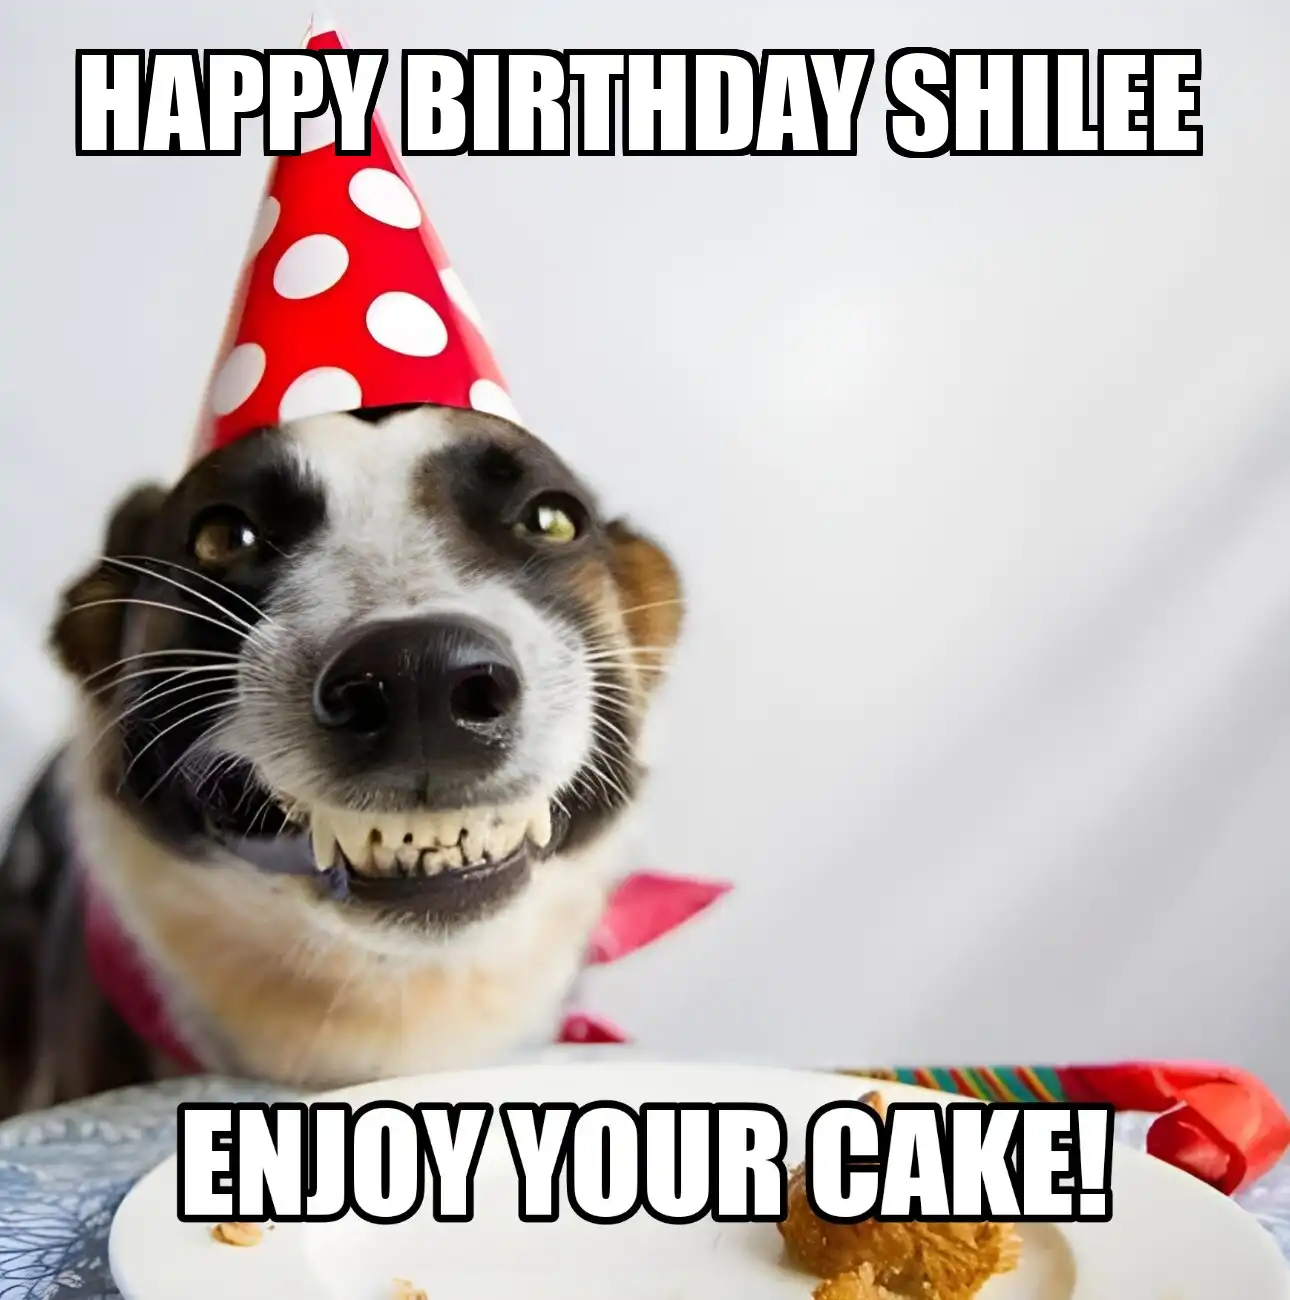 Happy Birthday Shilee Enjoy Your Cake Dog Meme